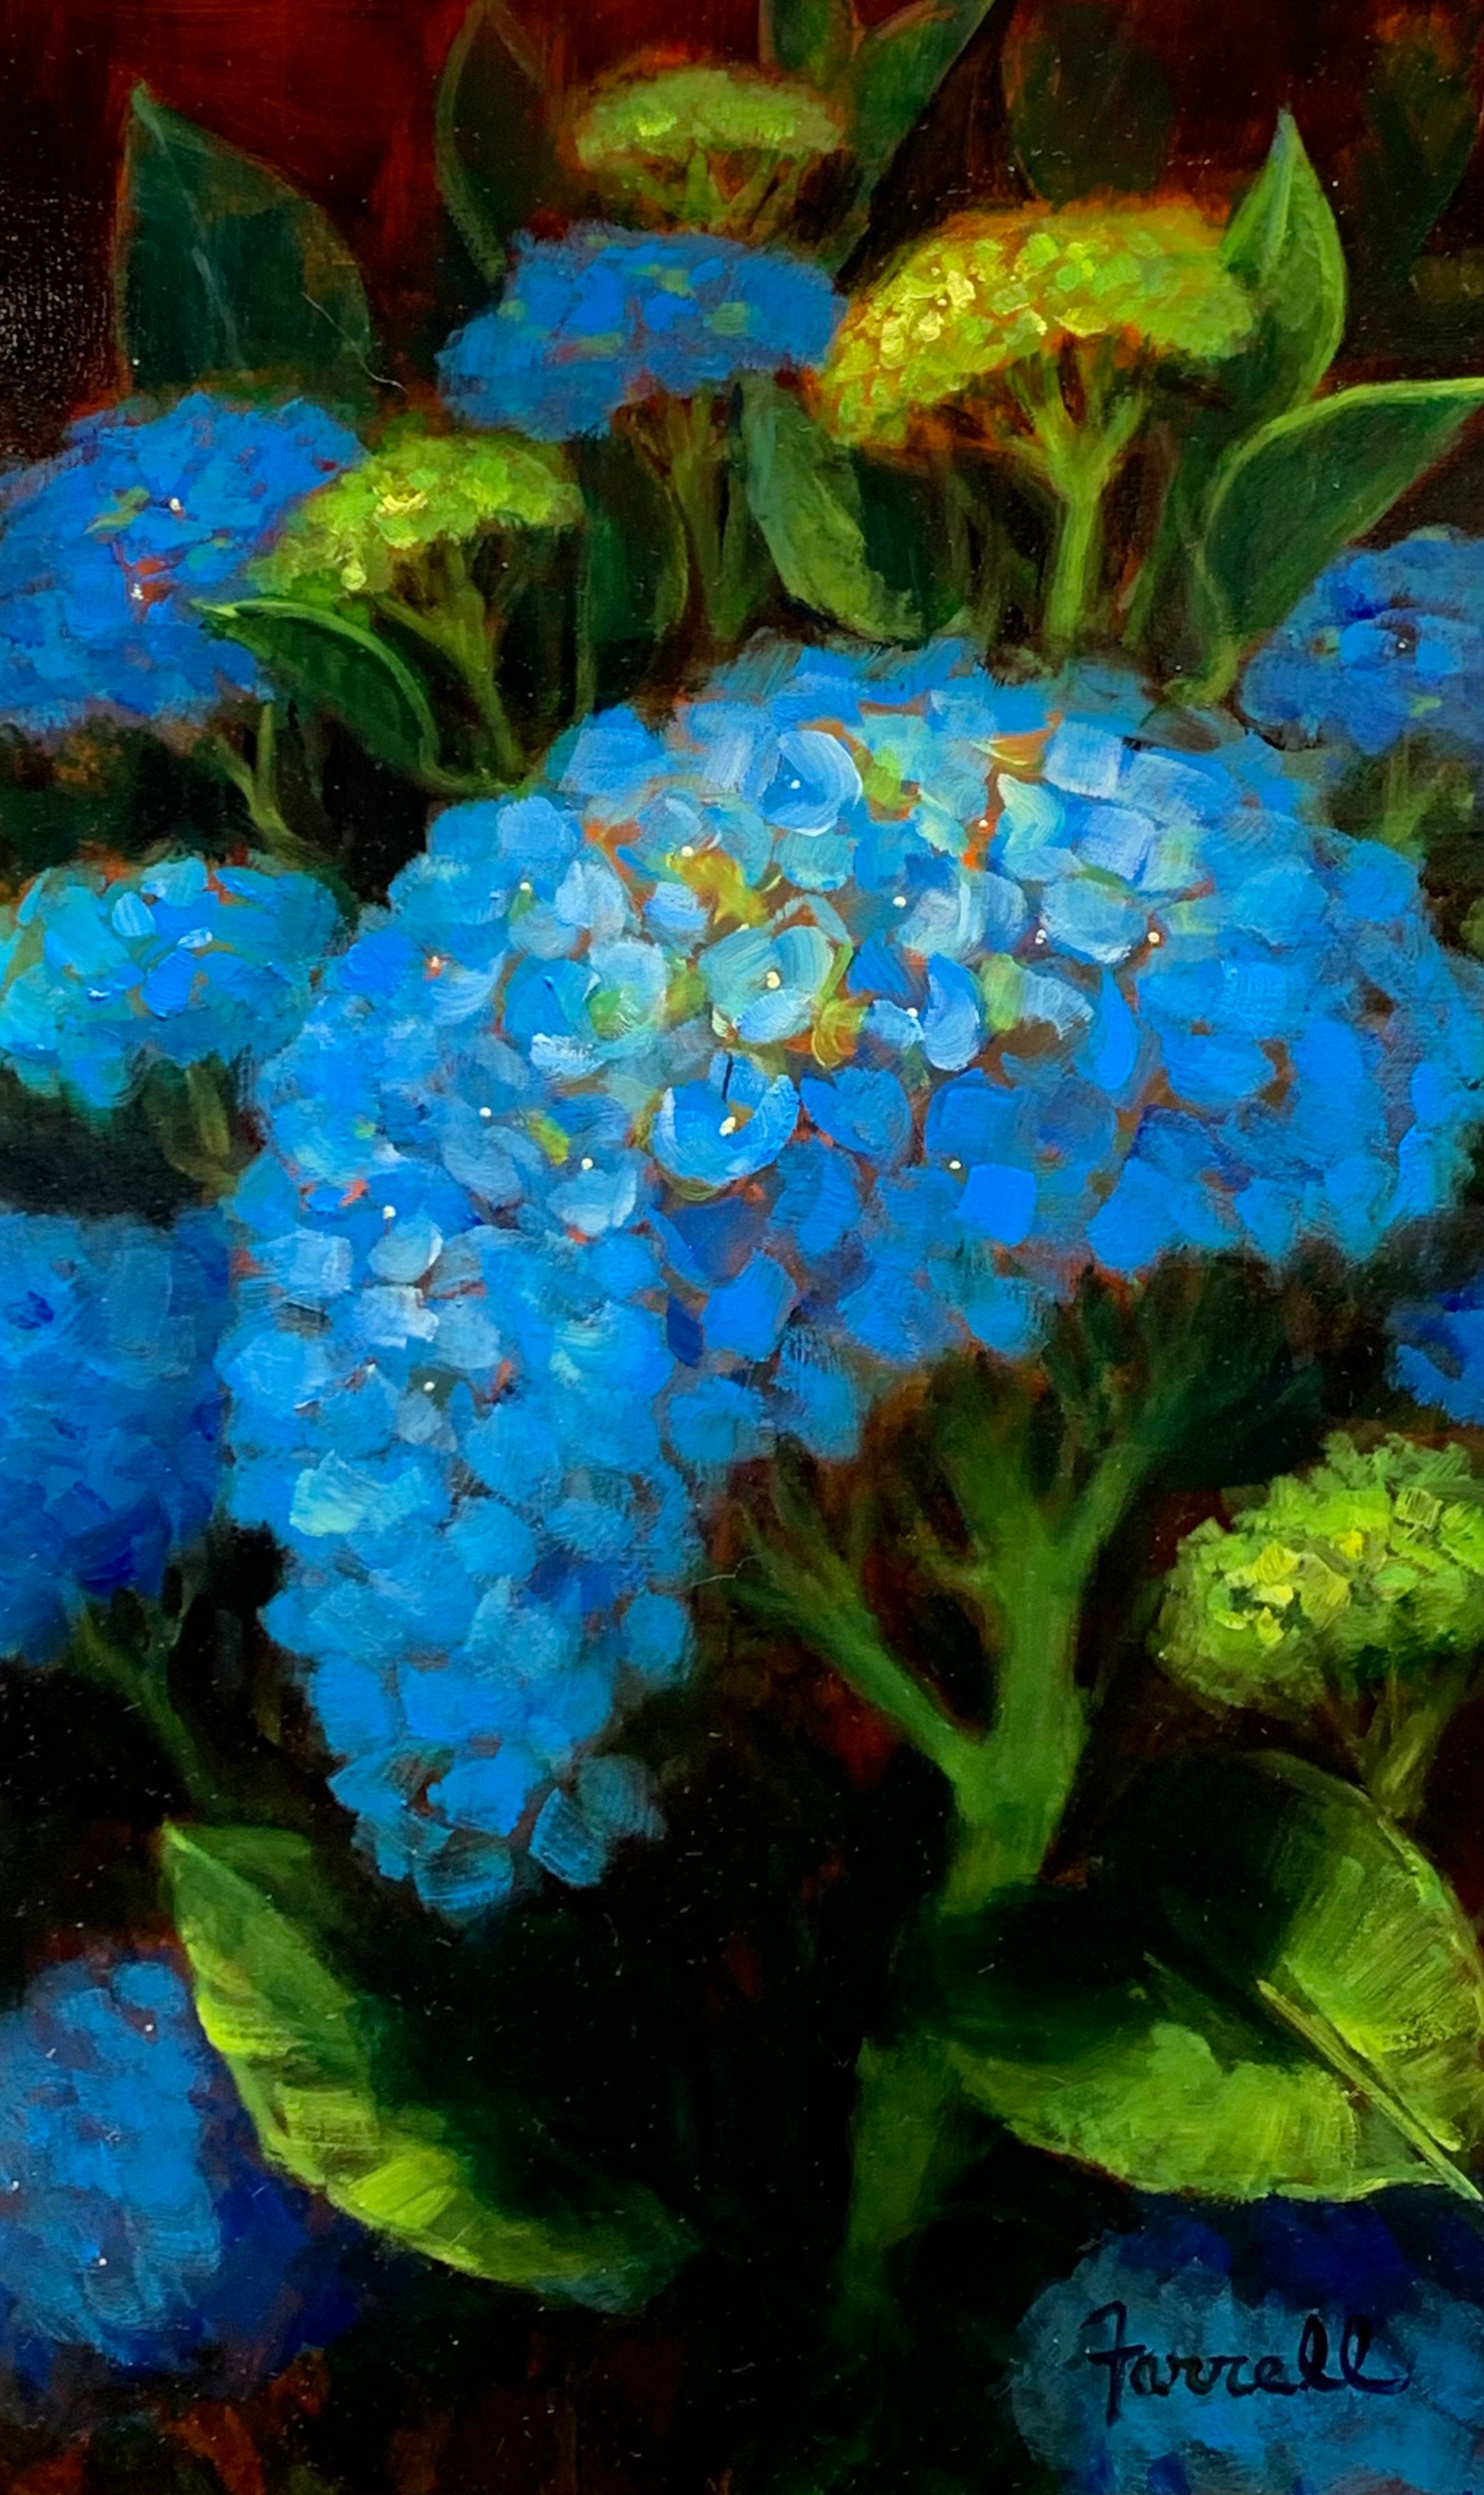 Sean Farrell, "Blue Hydrangea Bloom", 16x10 Floral Still Life Oil Painting 